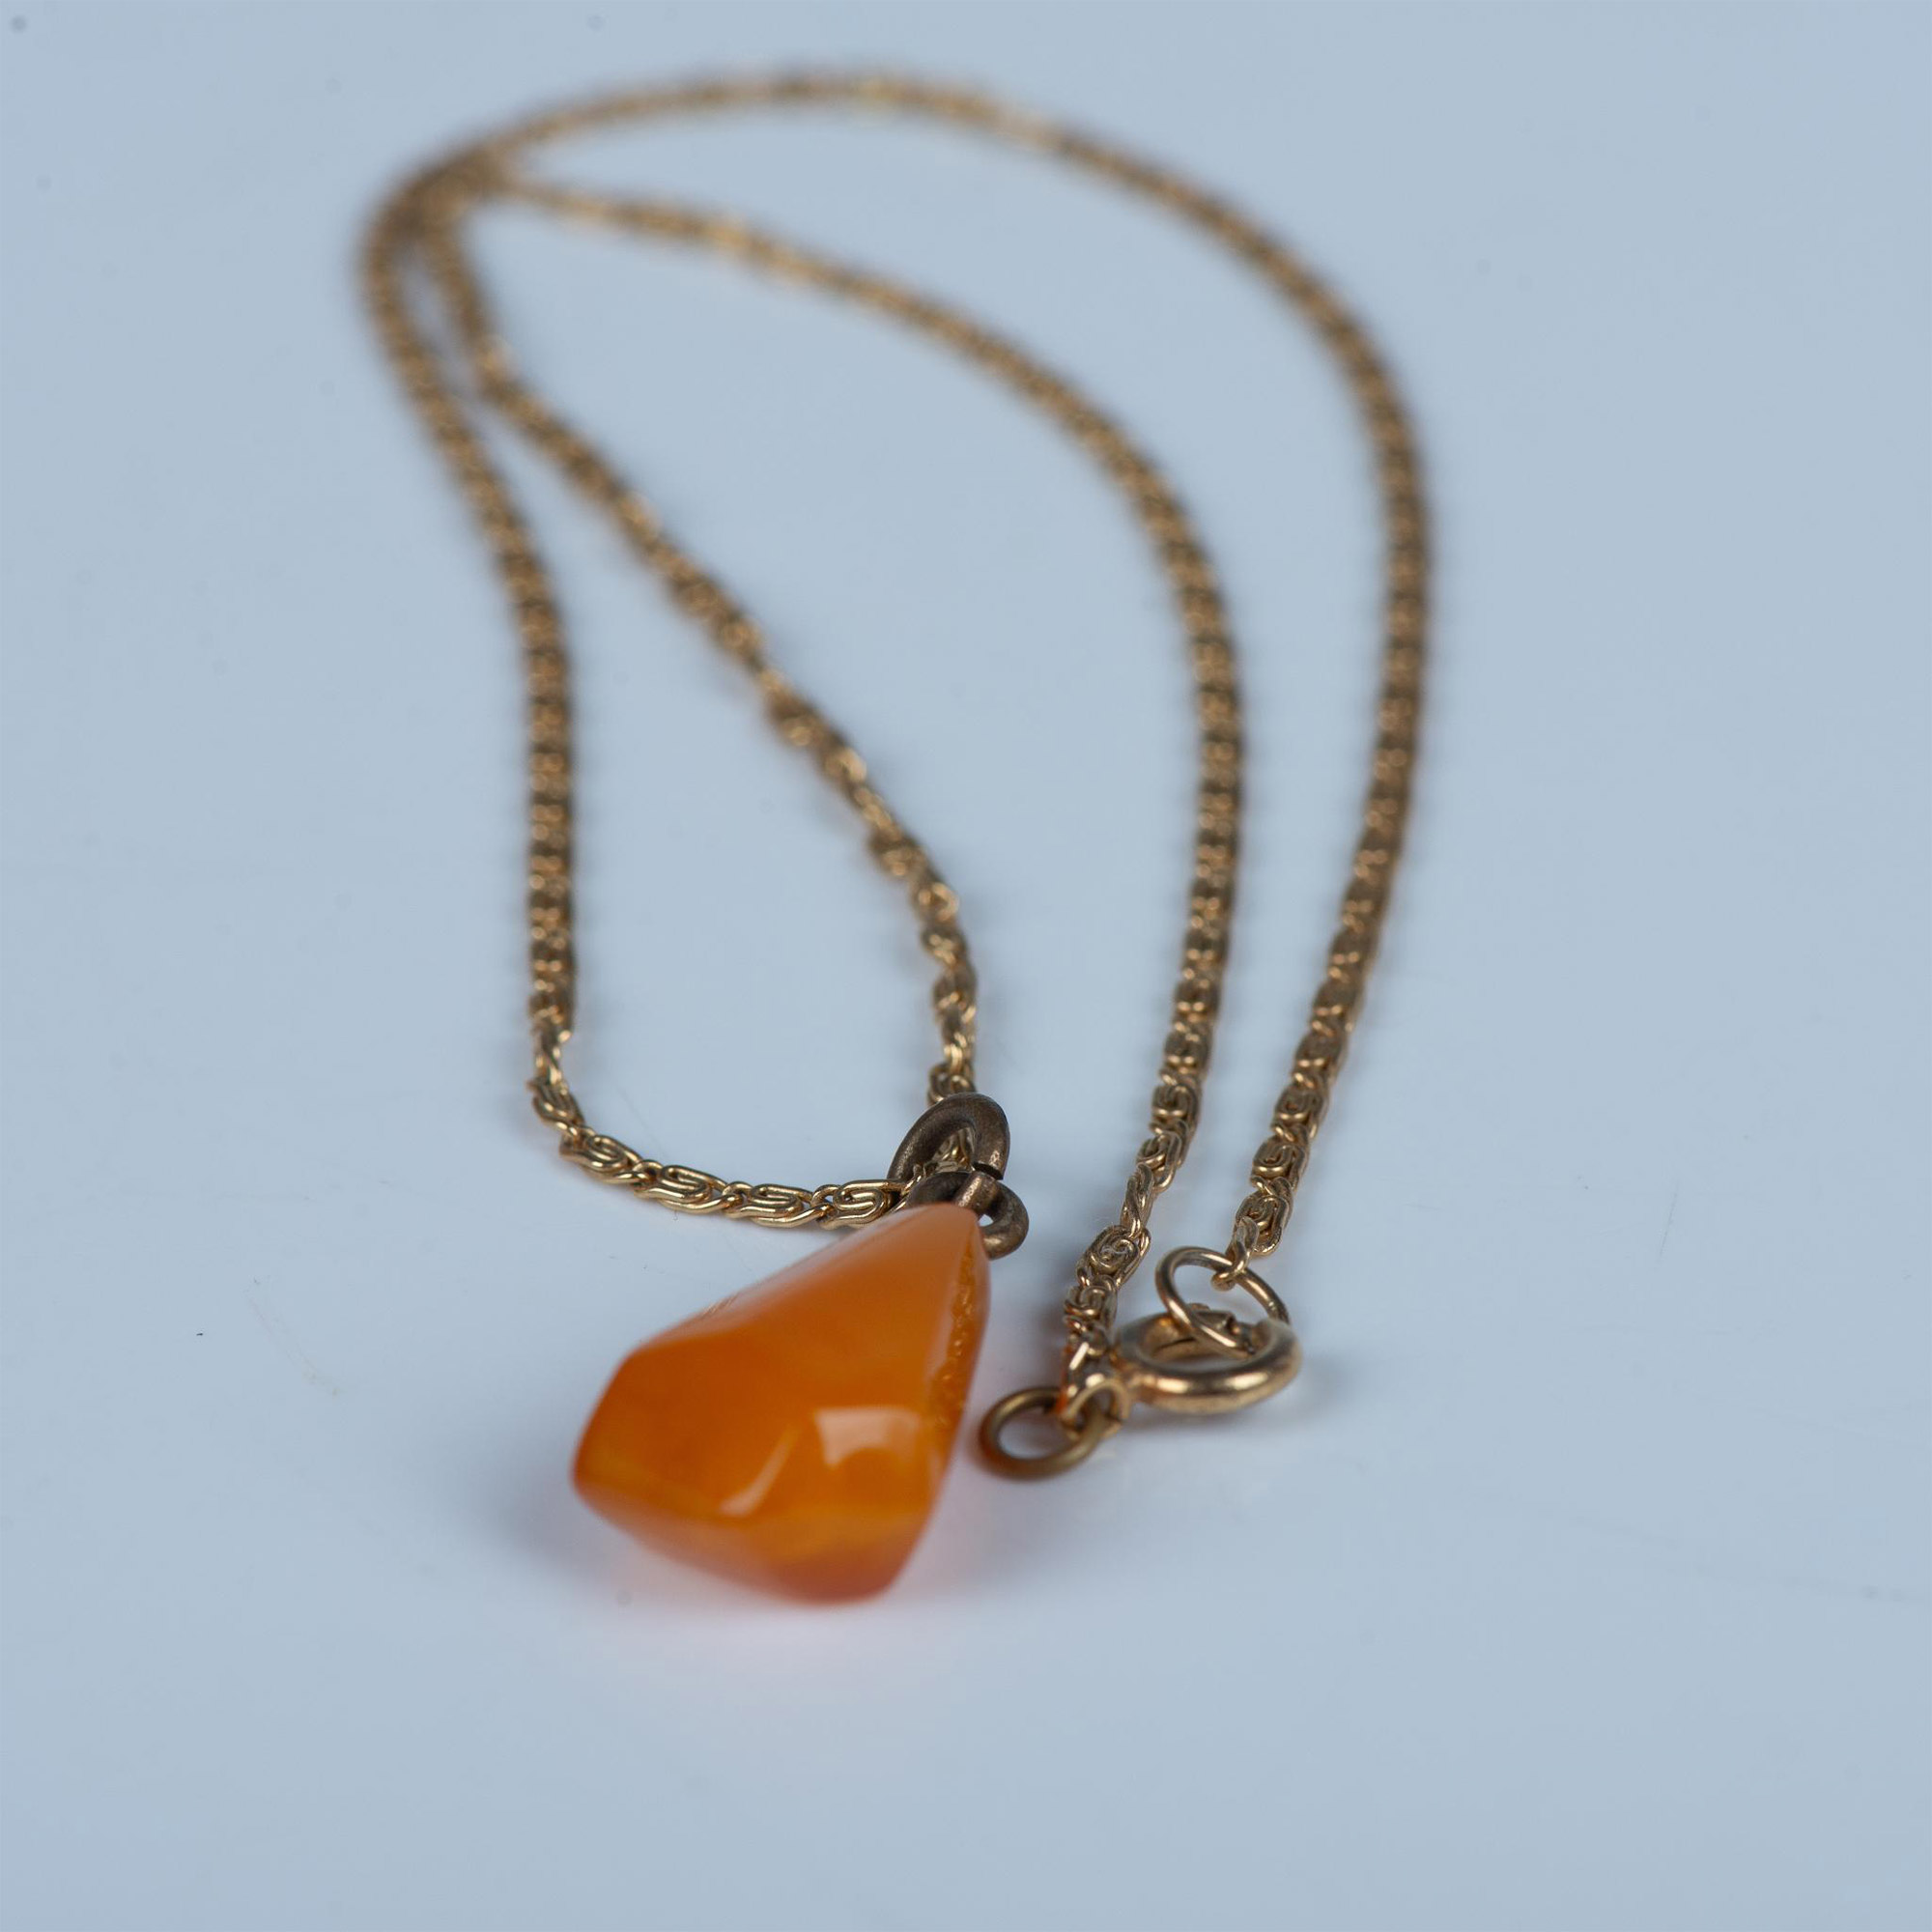 Beautiful Gold Tone Amber Pendant Necklace - Image 2 of 2